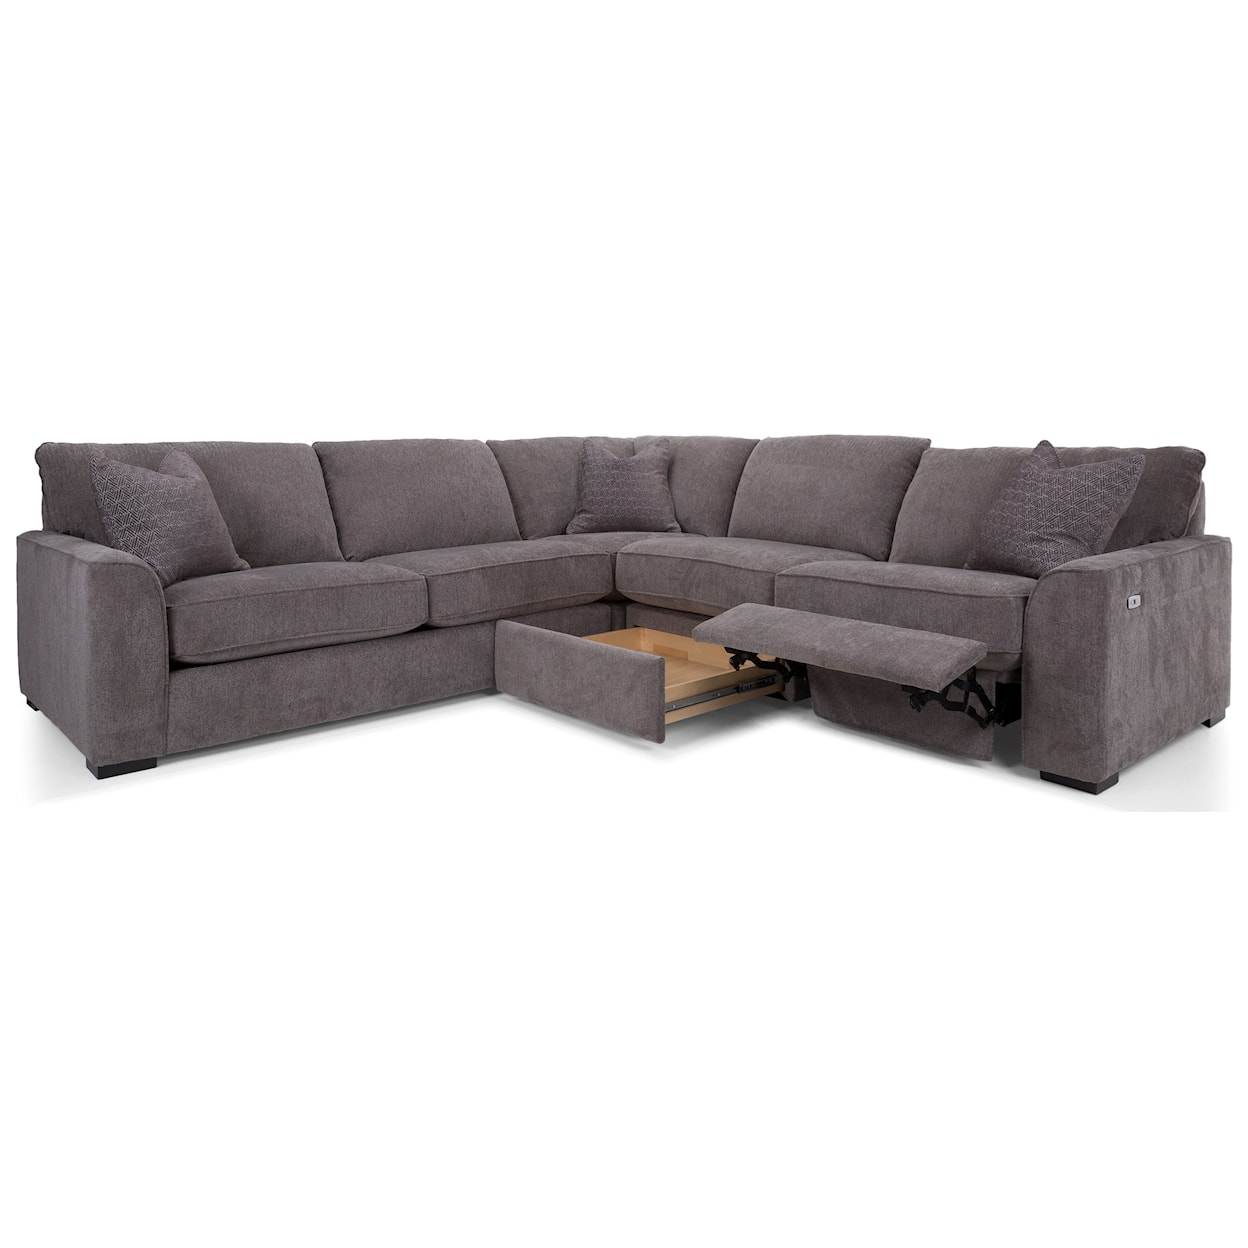 Decor-Rest 2786 3-Piece Reclining Sectional Sofa